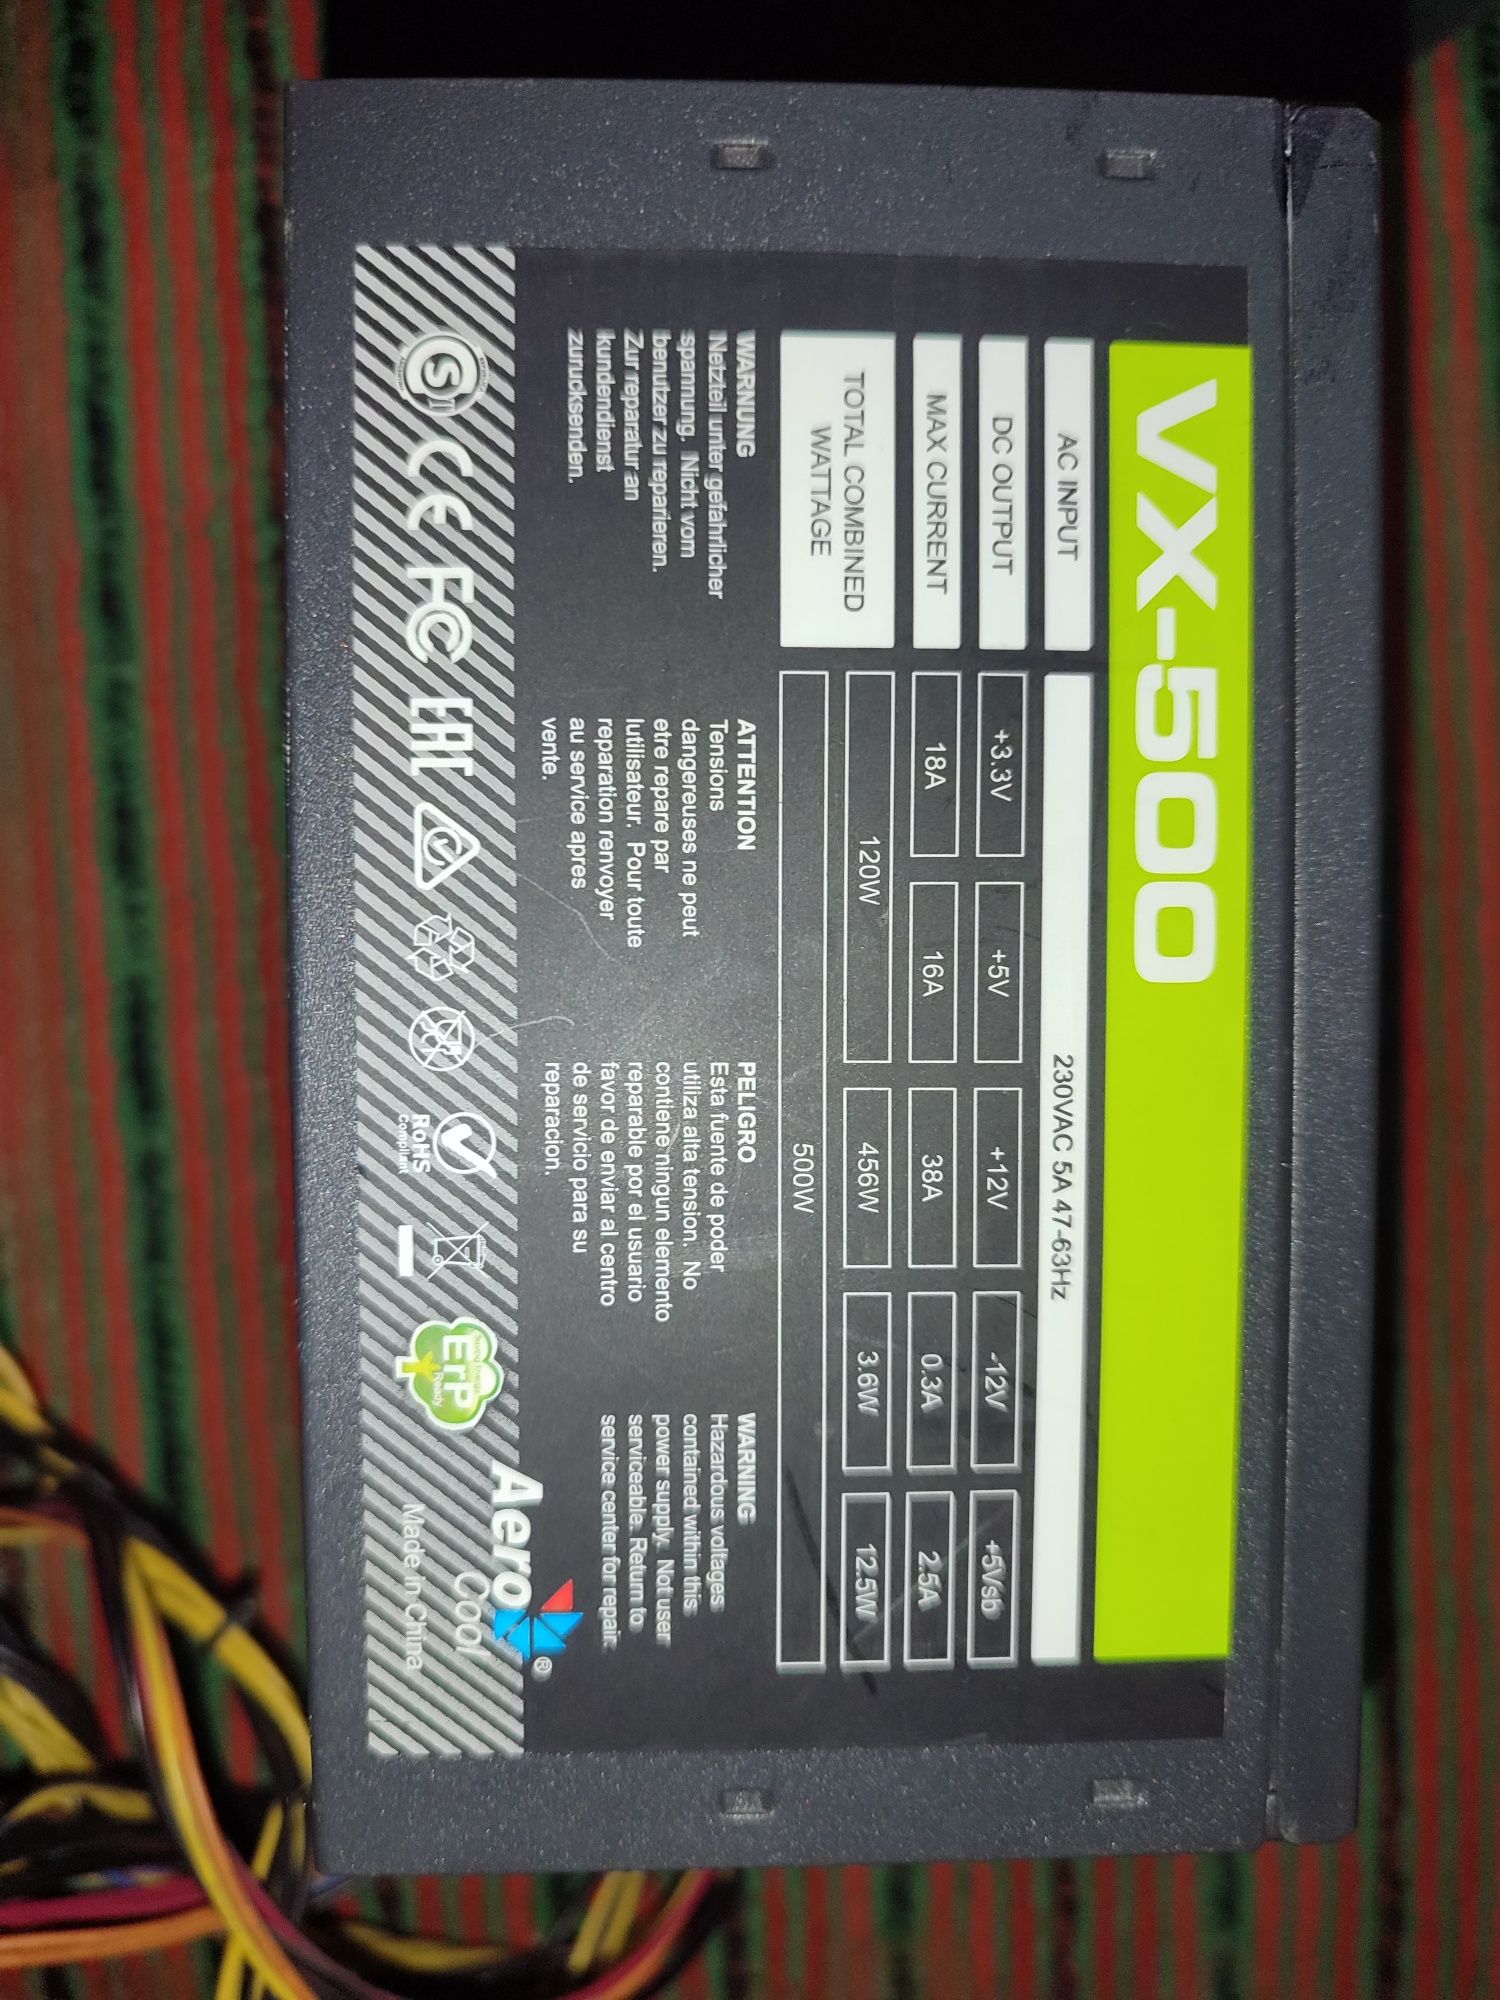 Aerocool VX 500w